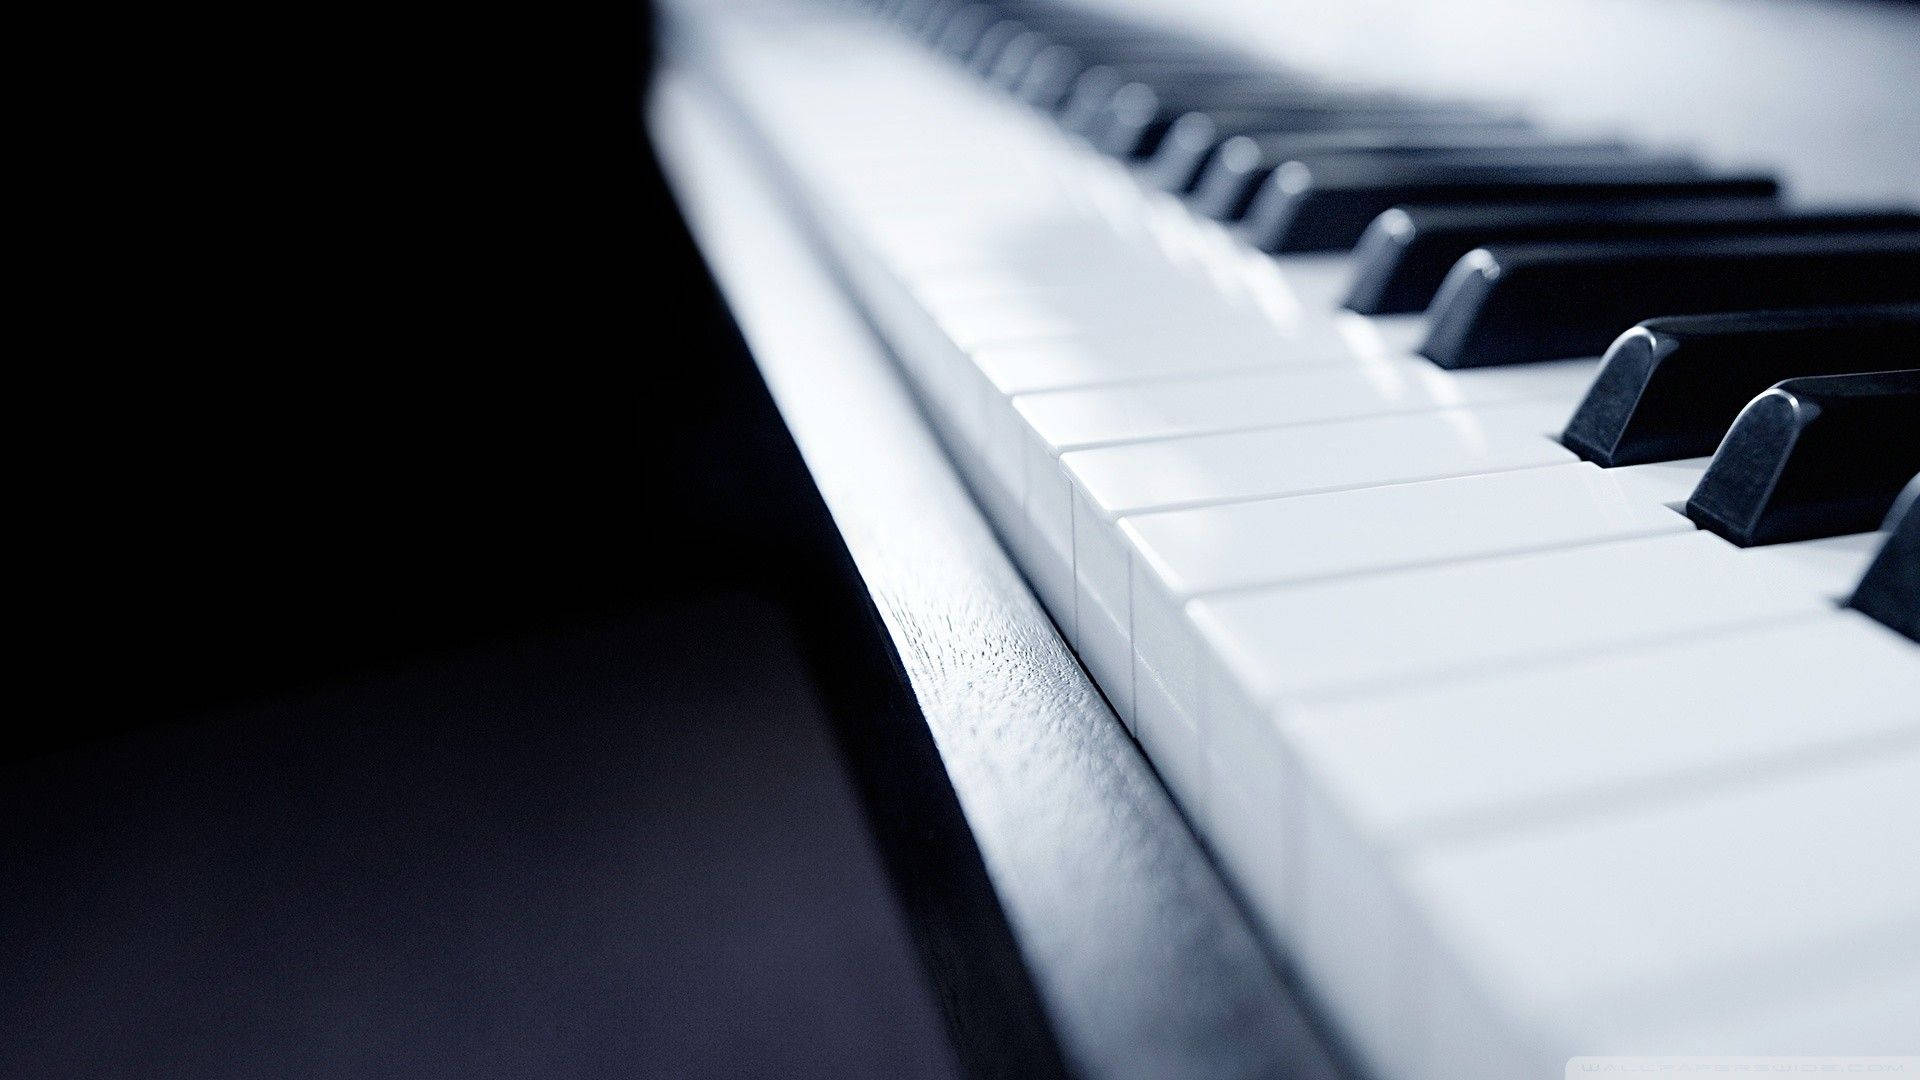 HD Piano Keyboard Grayscale Wallpaper